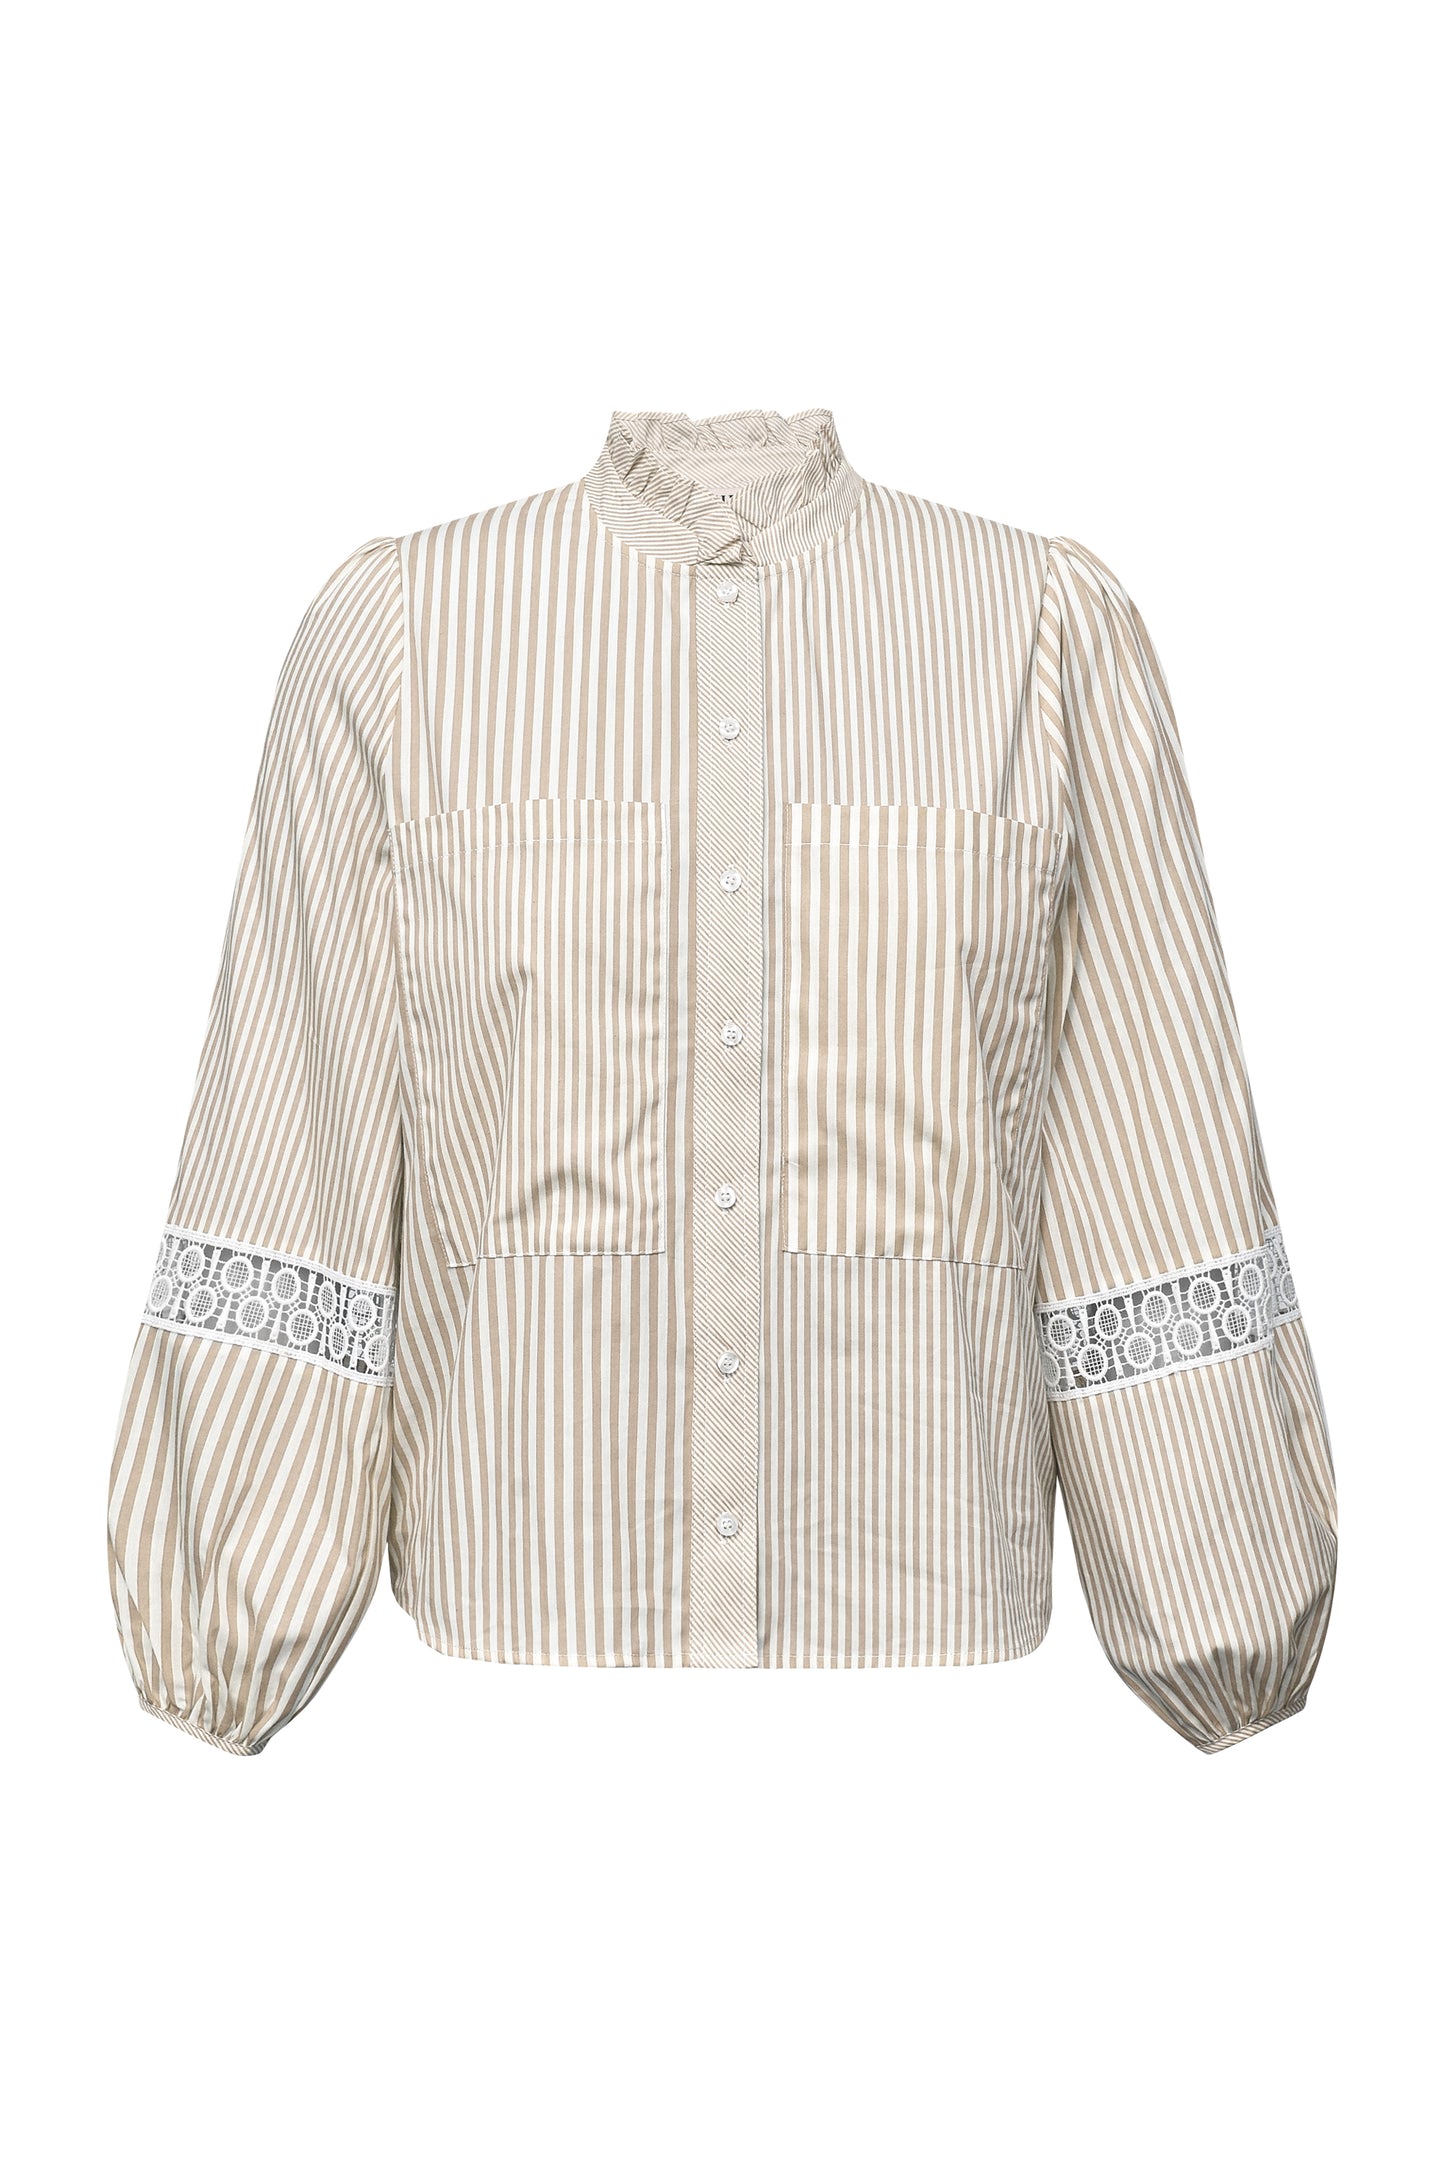 A-VIEW - Tiffany stripe shirt - Sand